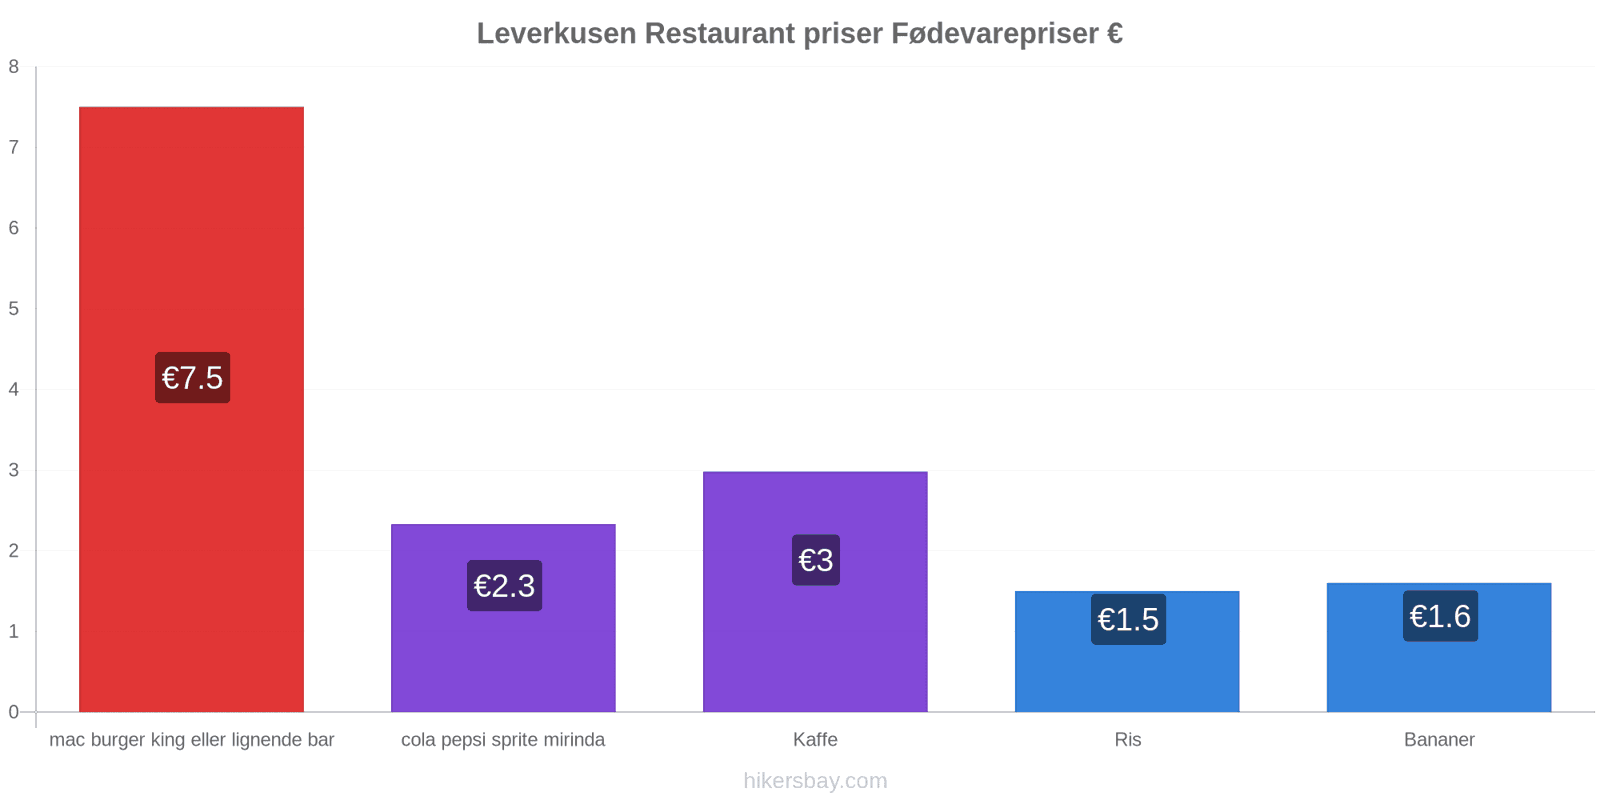 Leverkusen prisændringer hikersbay.com